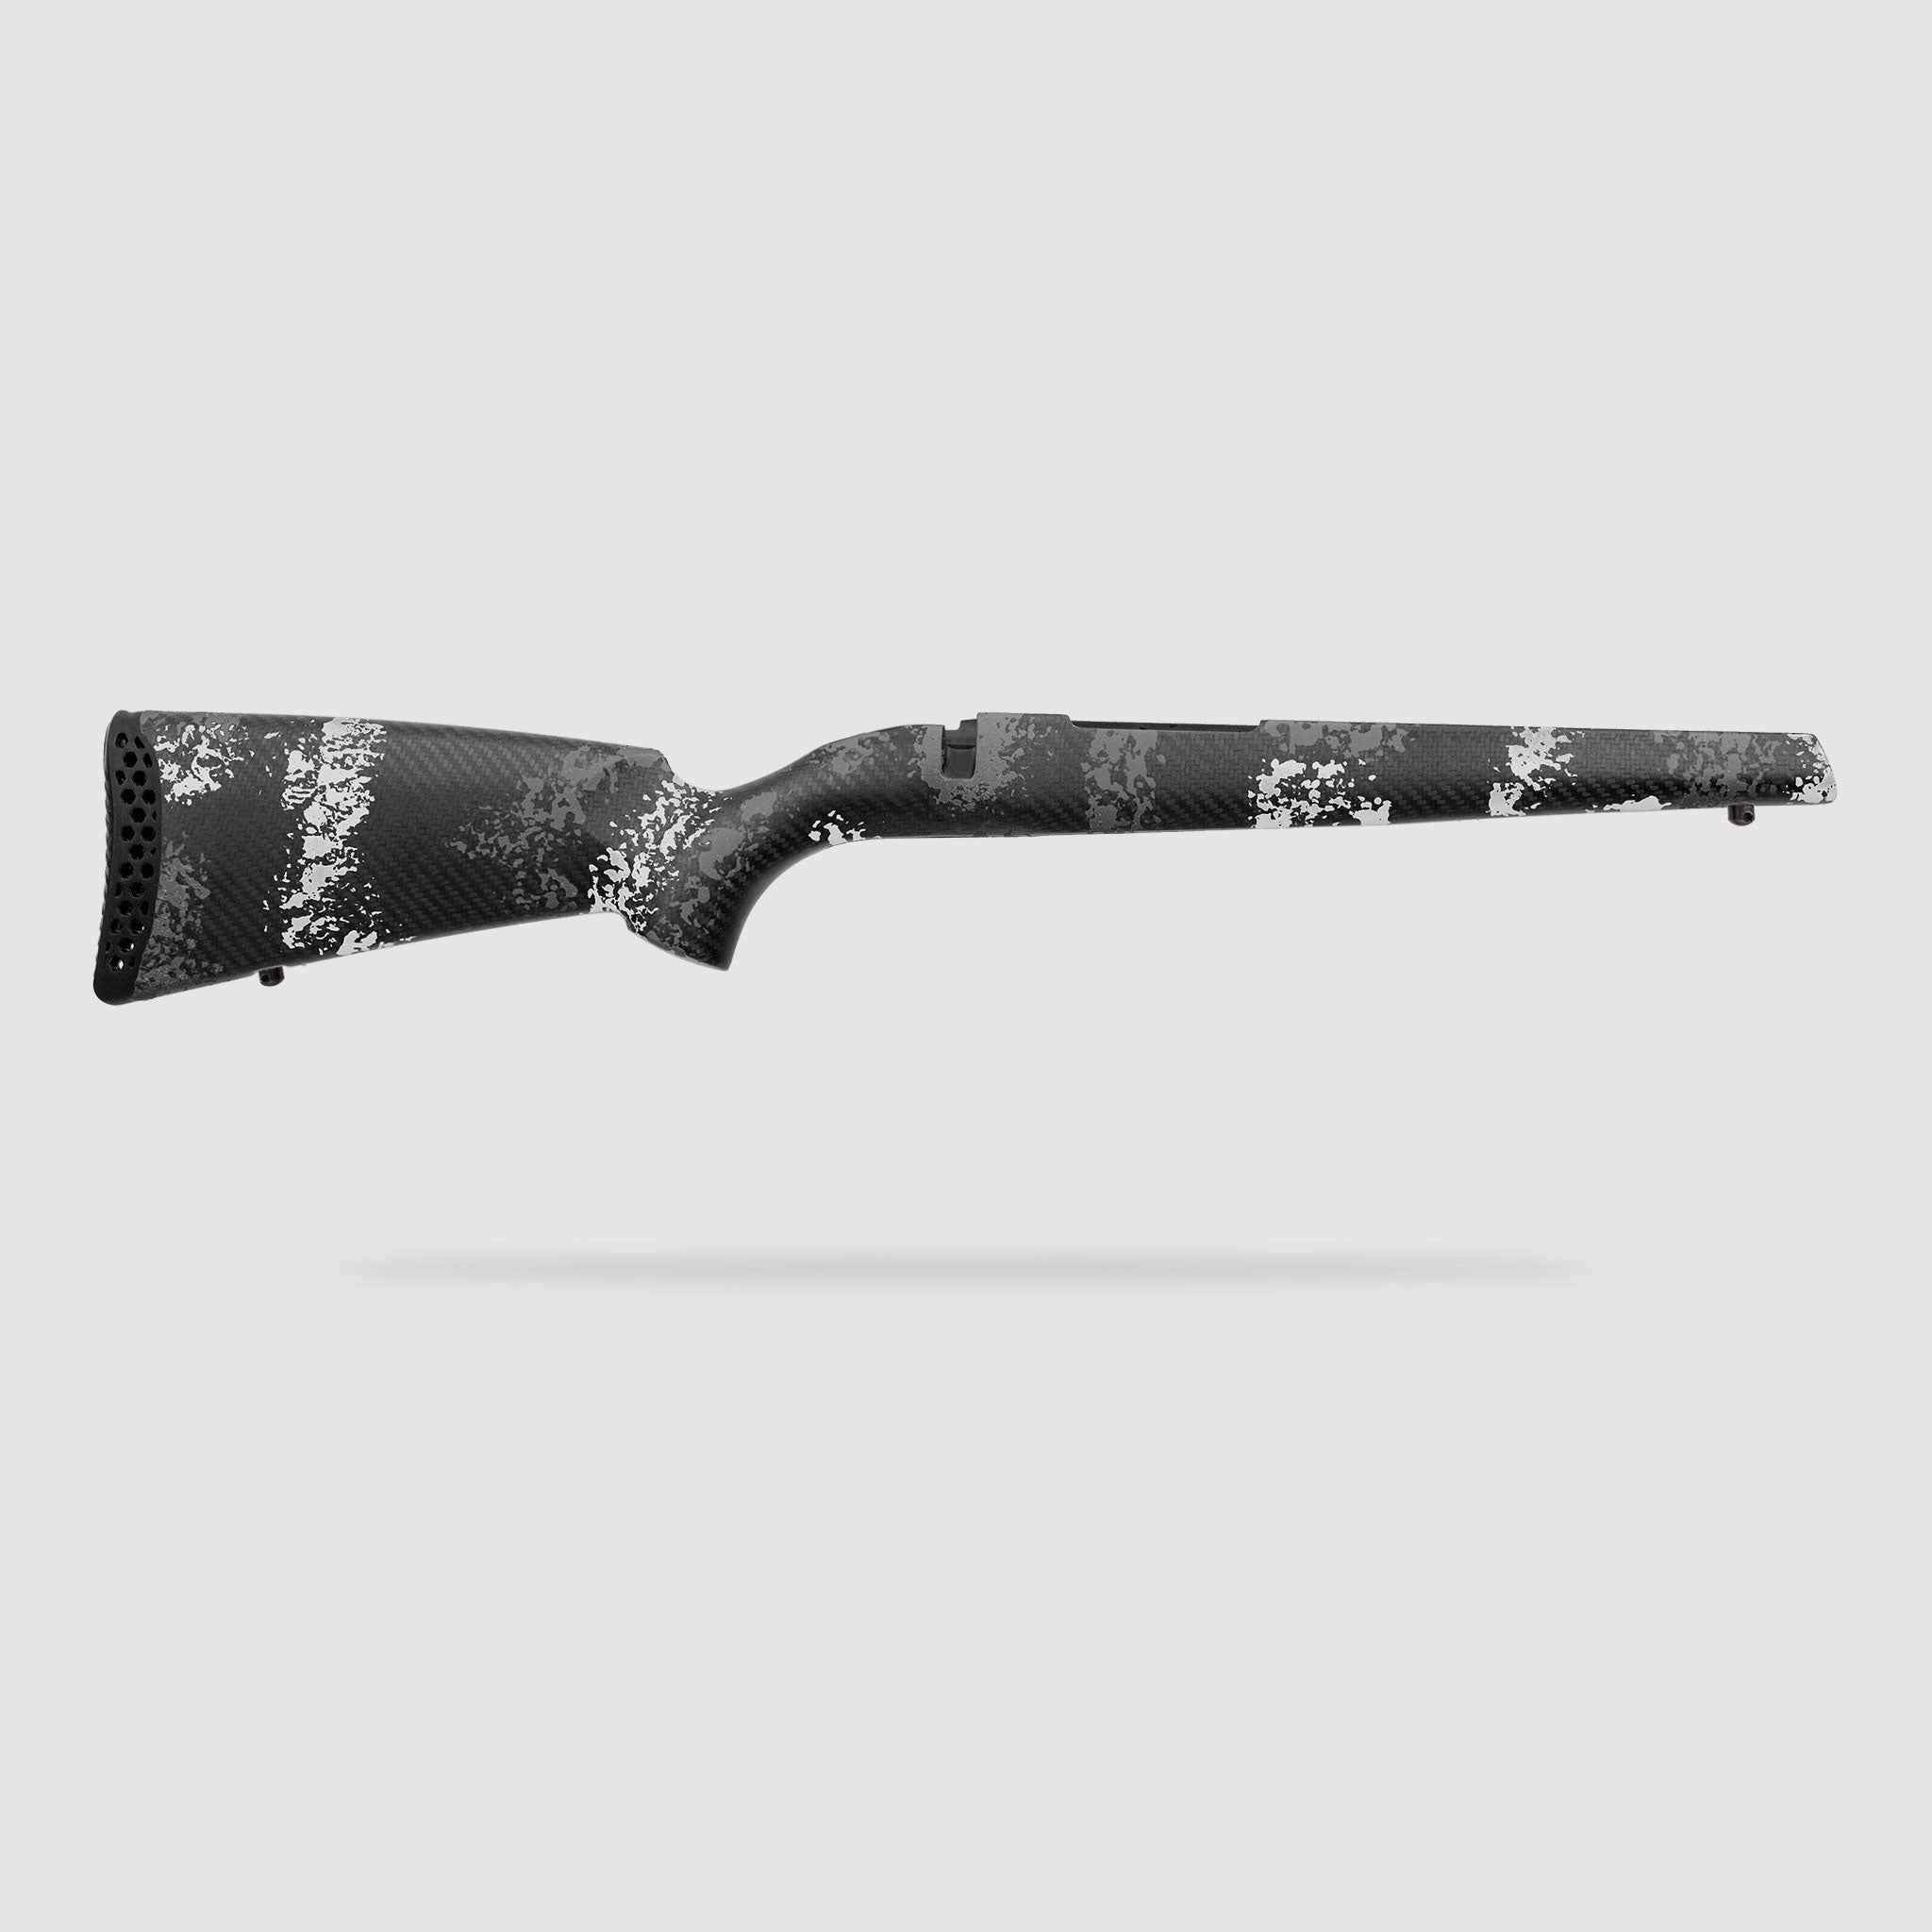 Blacktooth Remington 700 Universal Stock